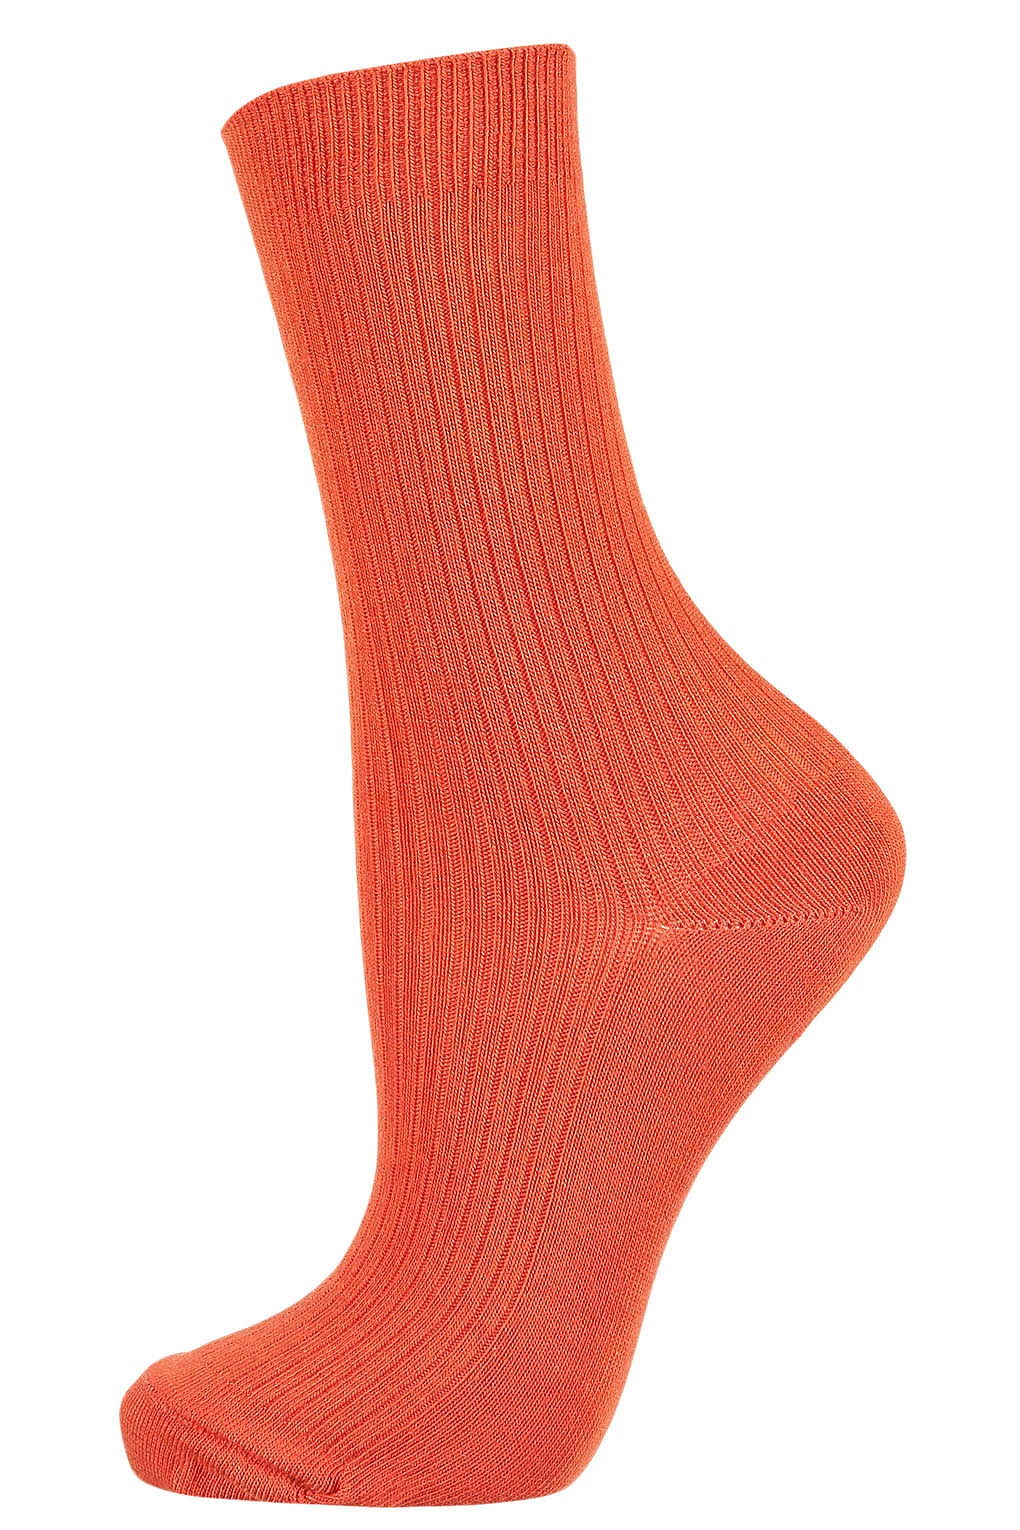 Topshop Rust Fine Ribbed Ankle Socks in Orange | Lyst